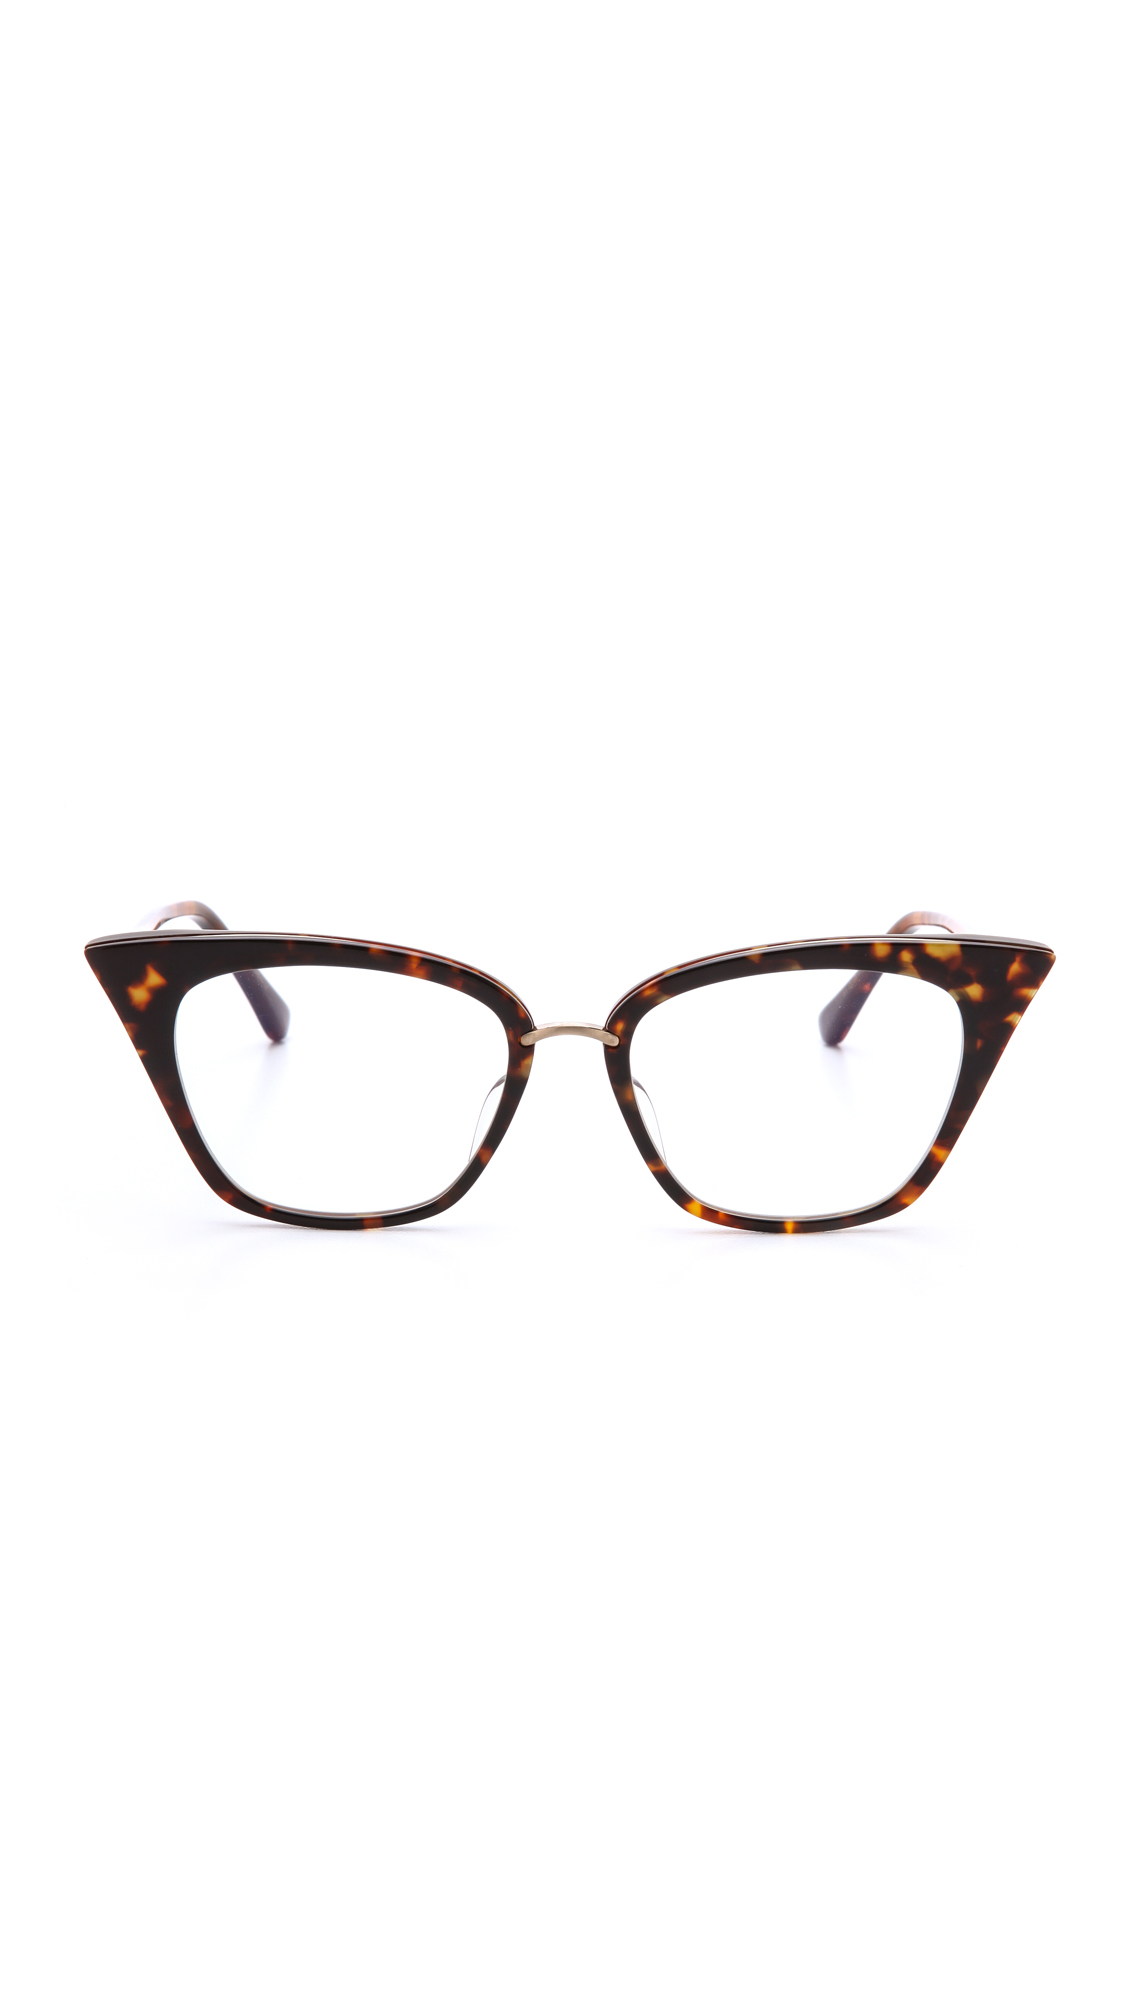 Dita Eyewear Rebella Glasses - Dark Tortoise/Gold in Metallic | Lyst